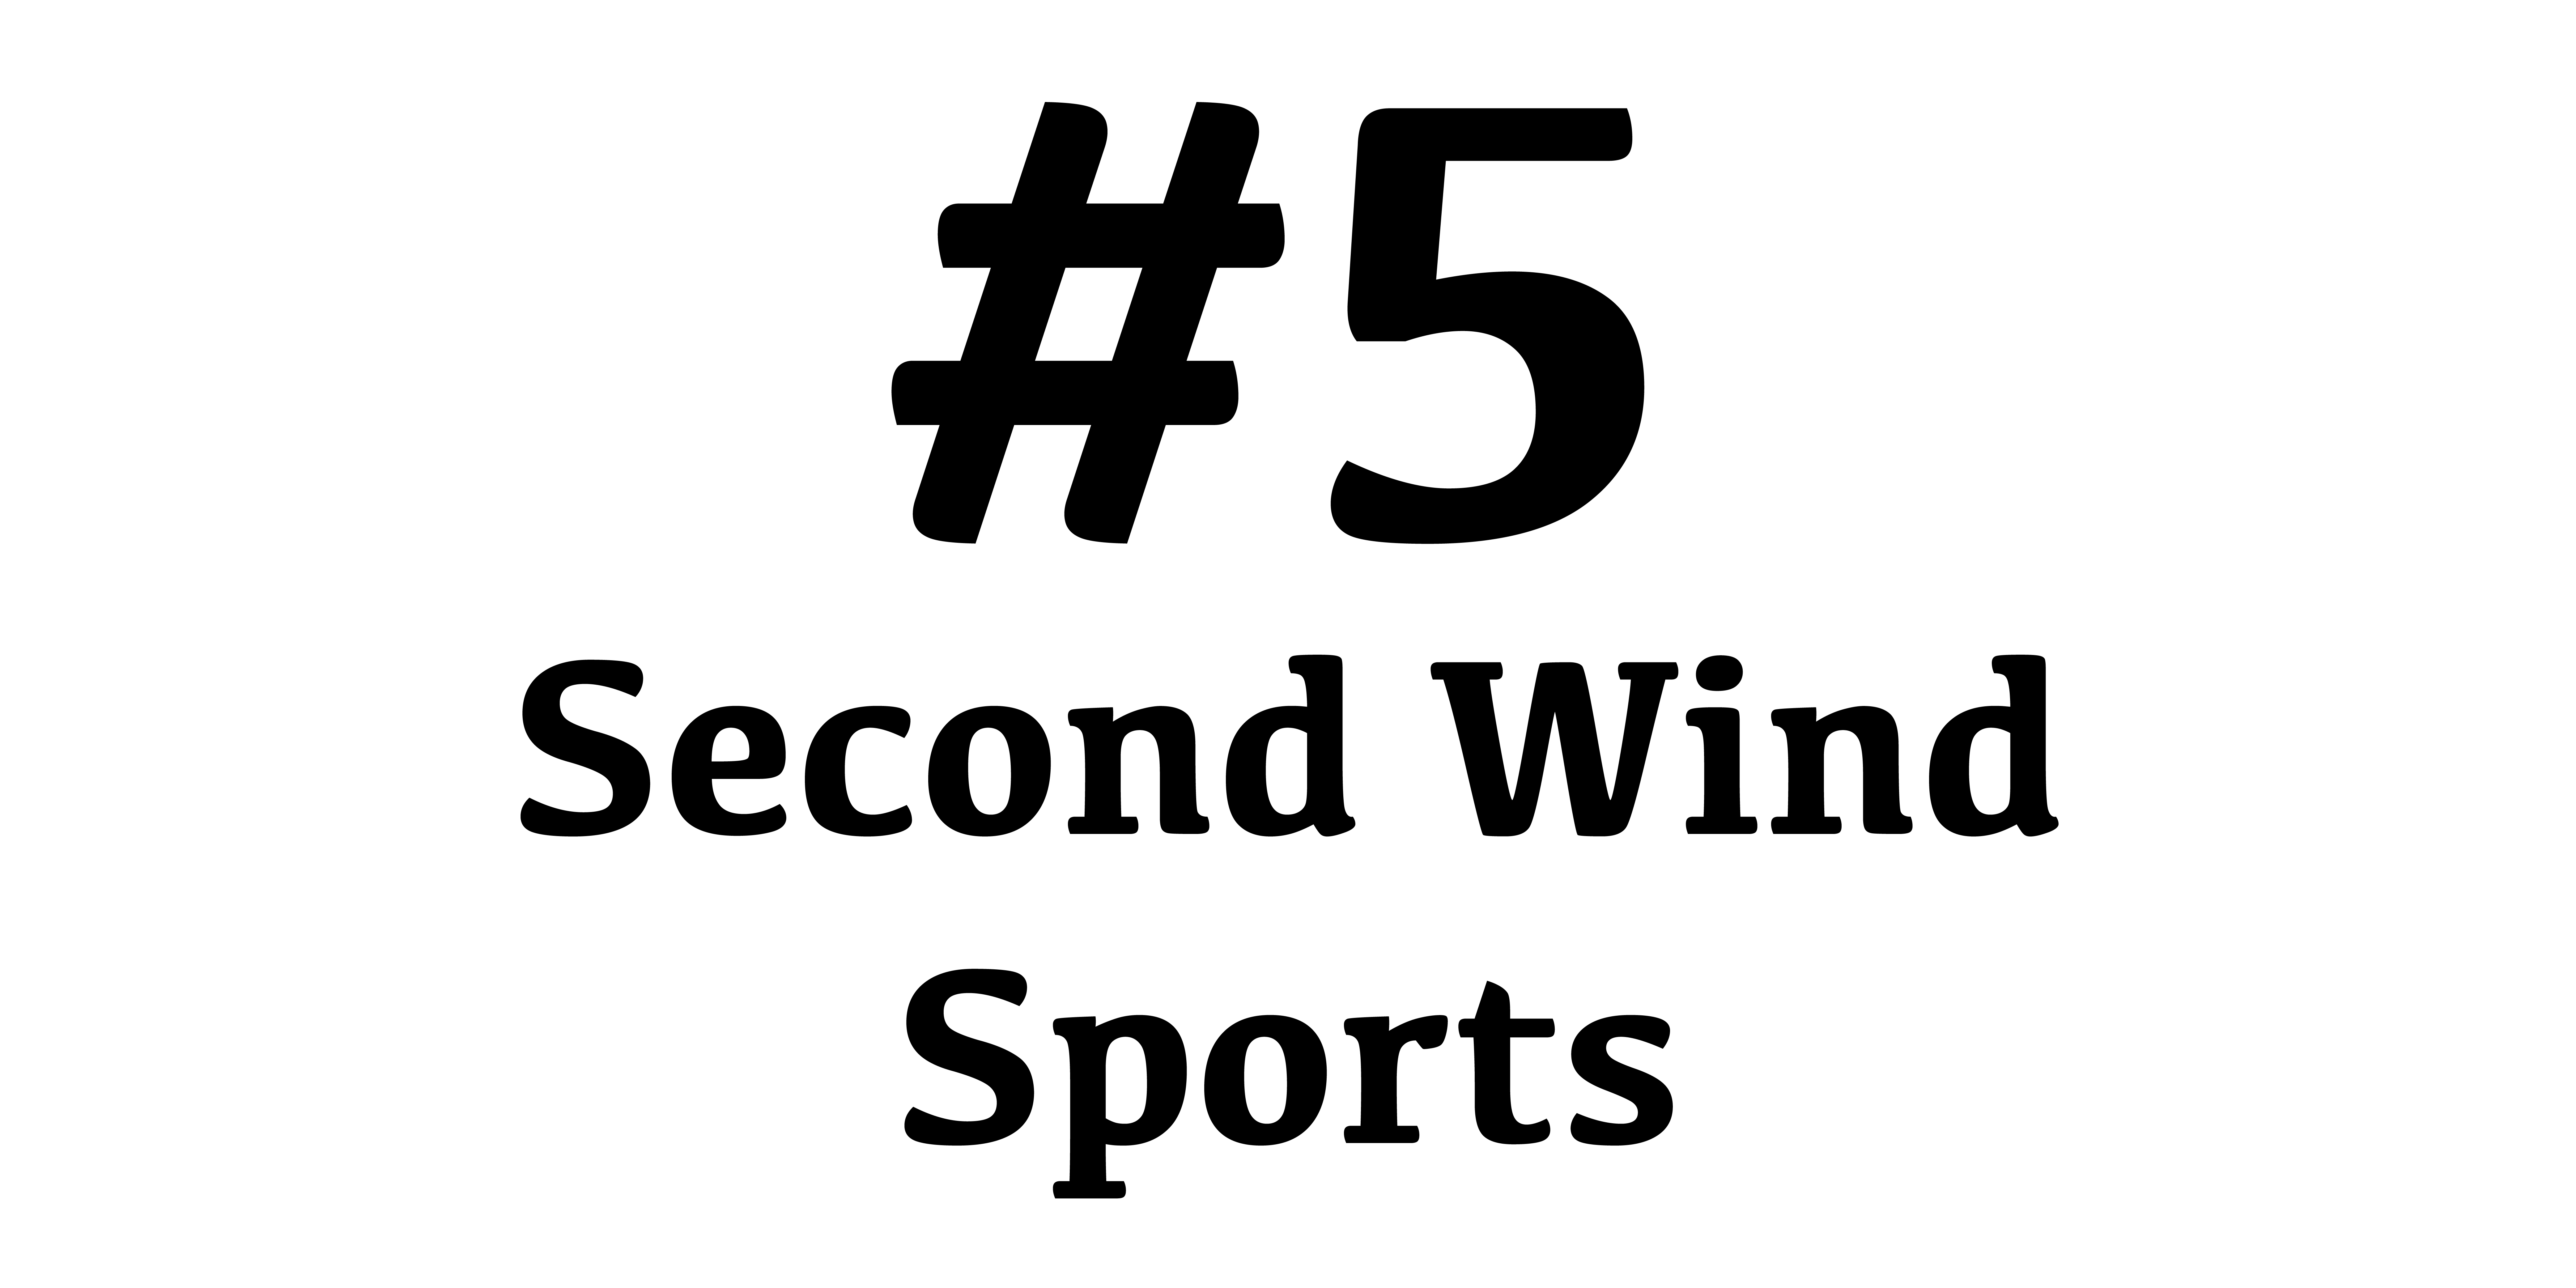 Second Wind Sports